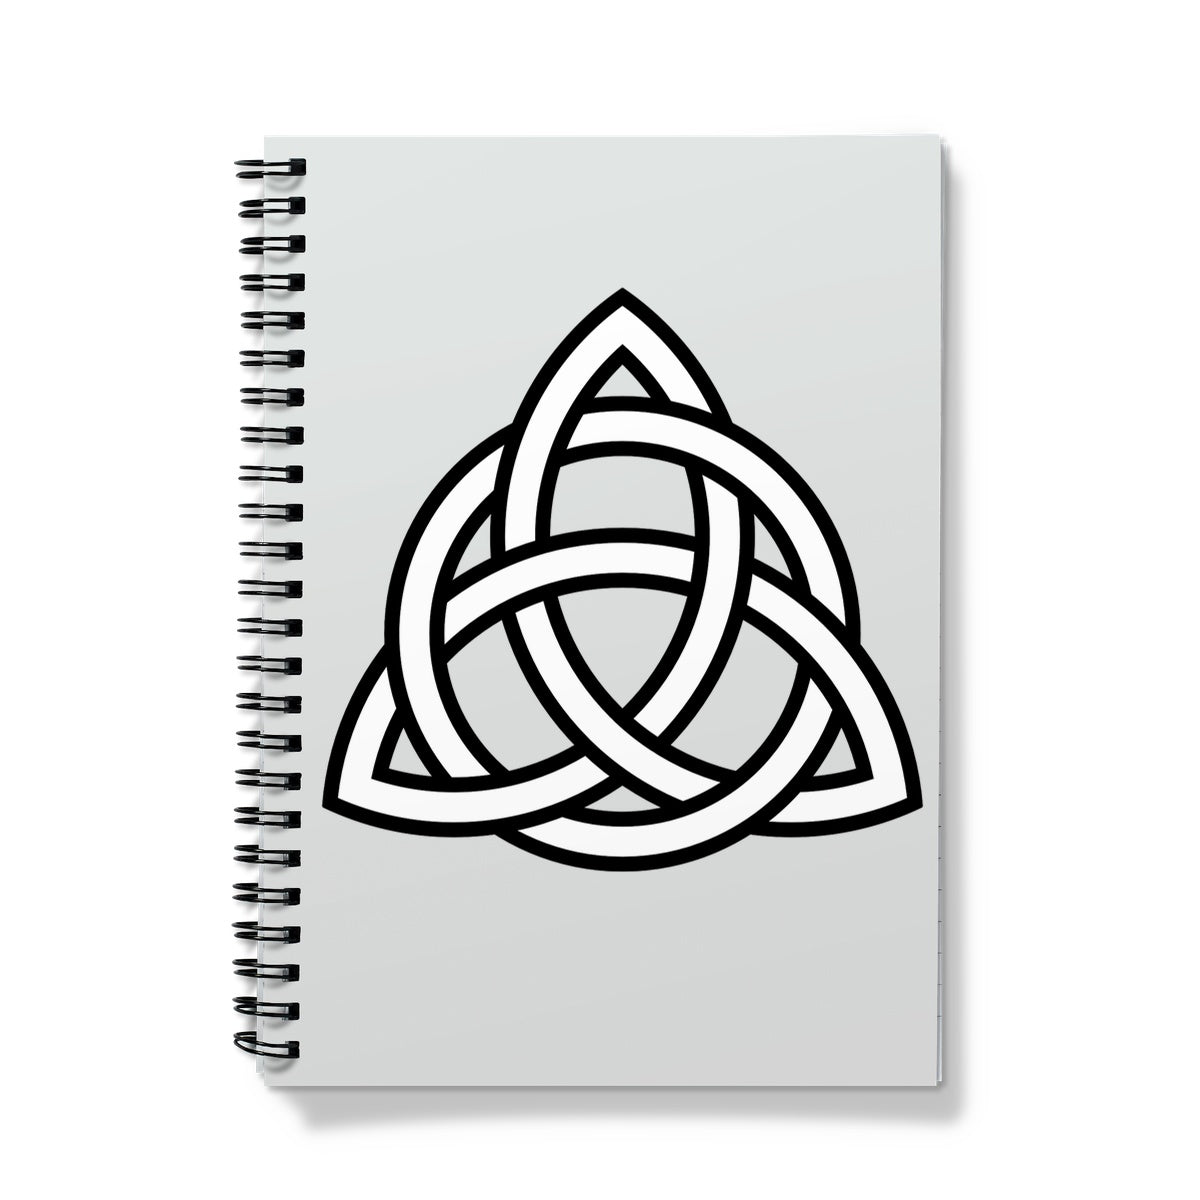 Triangular Celtic Knot Notebook